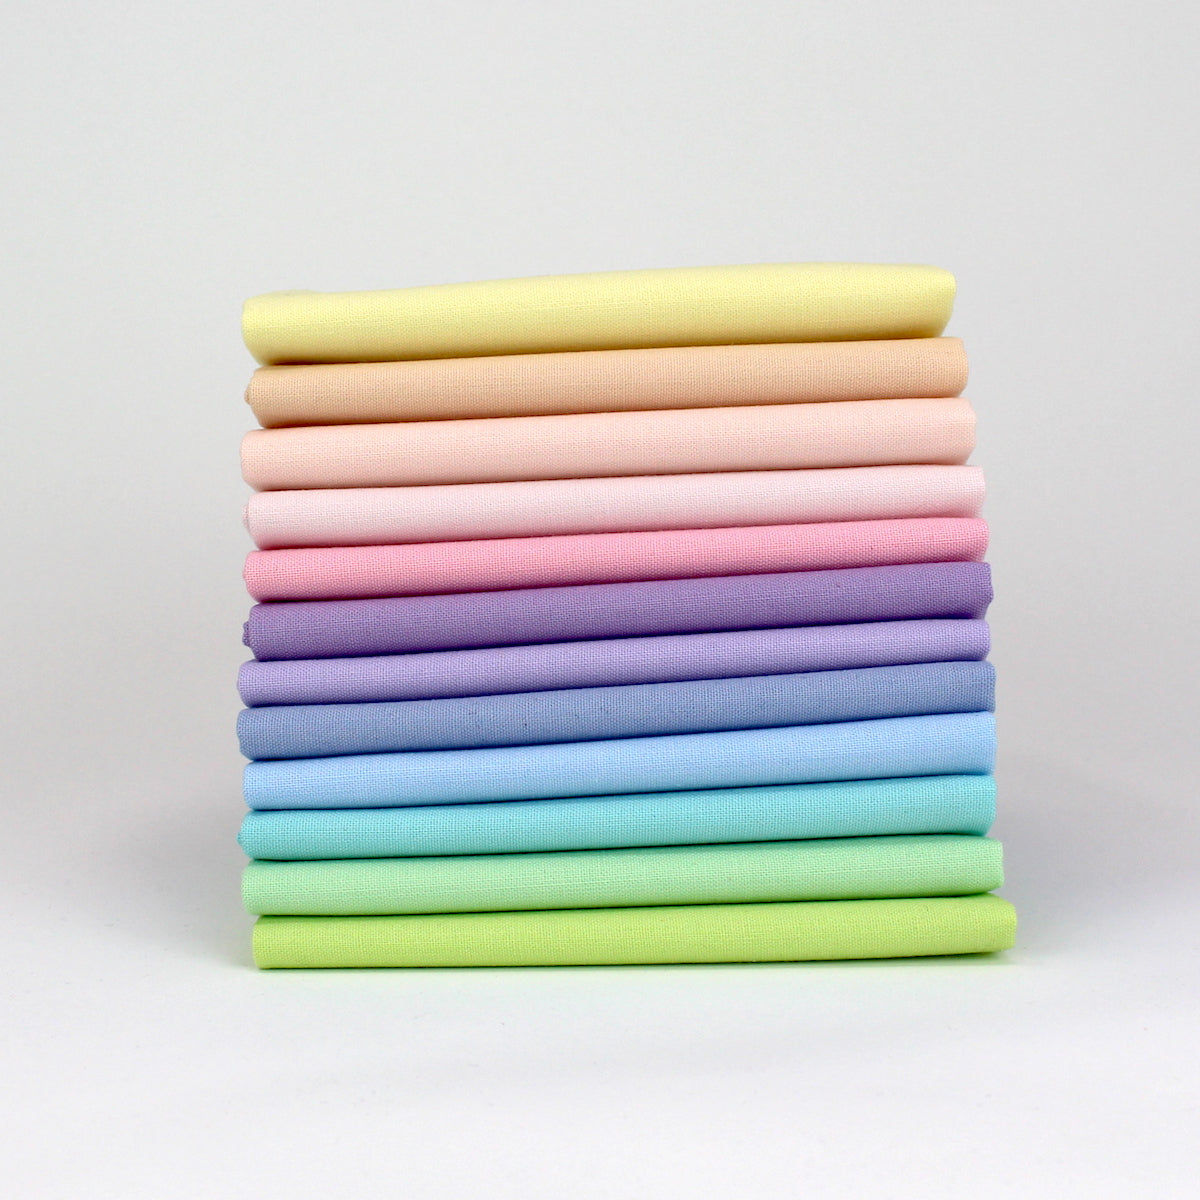 Threadart 12 Fat Quarter Bundle - Rainbow and Pastel Solids 100% Cotton  Fabric - Premium 100% Cotton Quilting Fabric - No Duplicates - Full Size  Fat